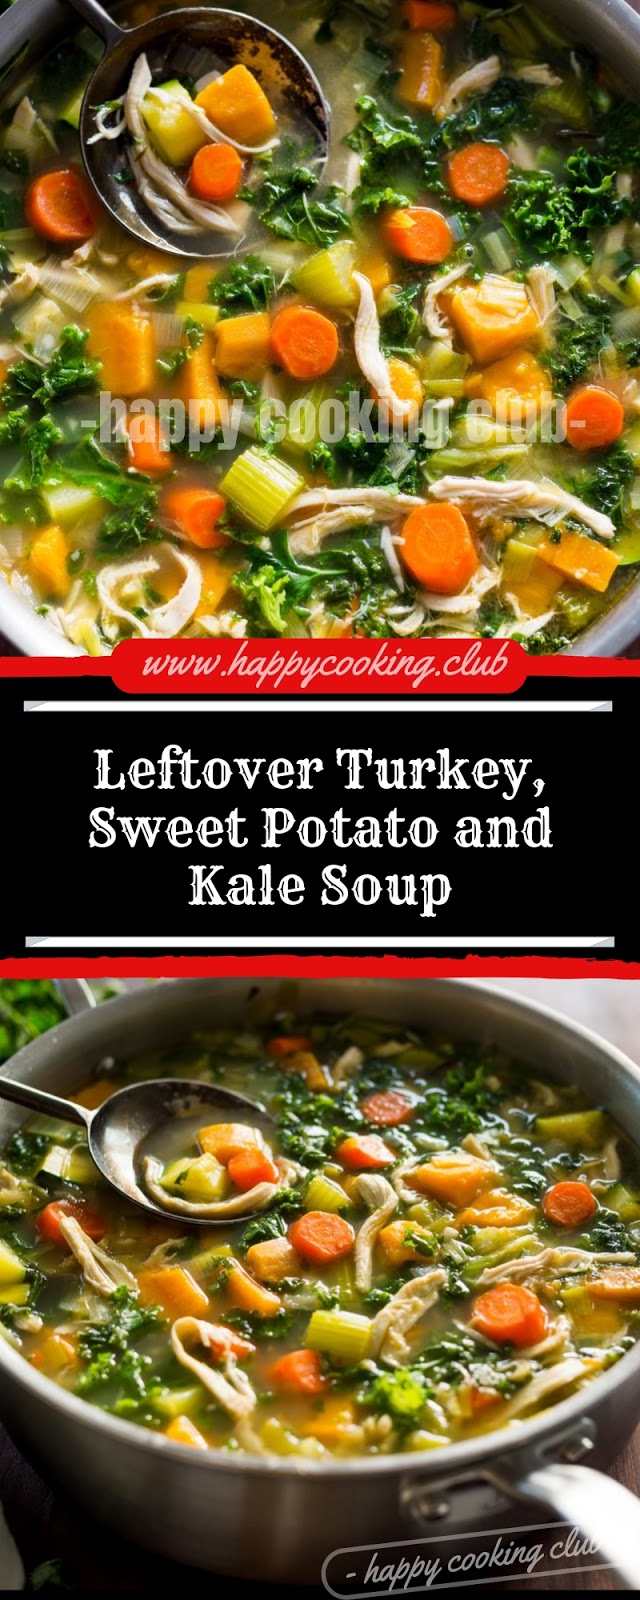 Leftover Turkey, Sweet Potato and Kale Soup